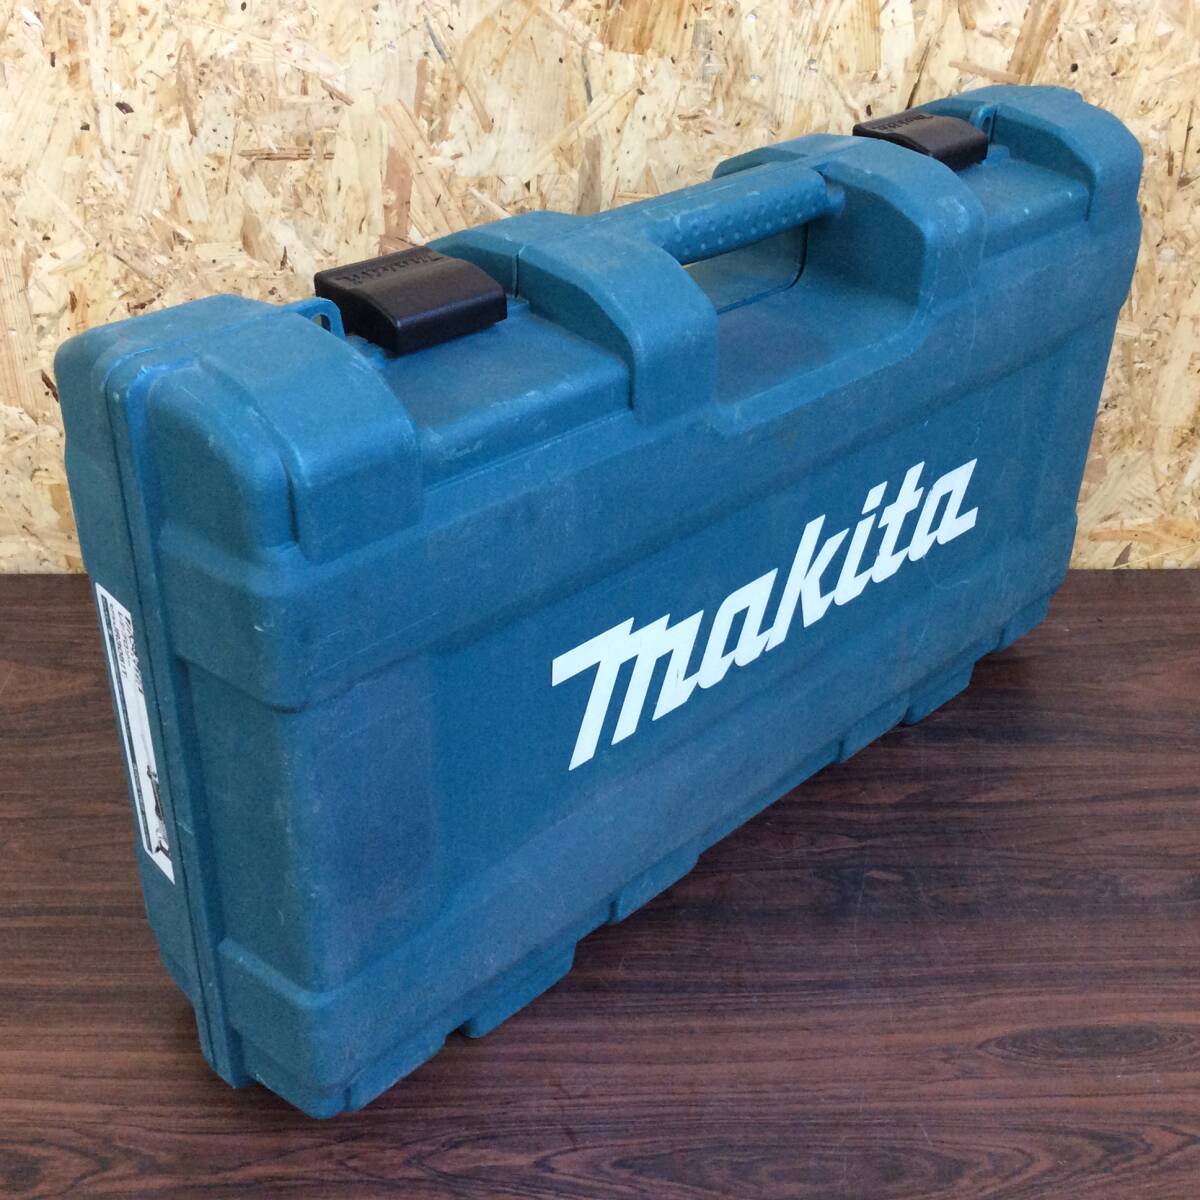 [RH-8841] secondhand goods makita Makita reciprocating engine so-JR3051T